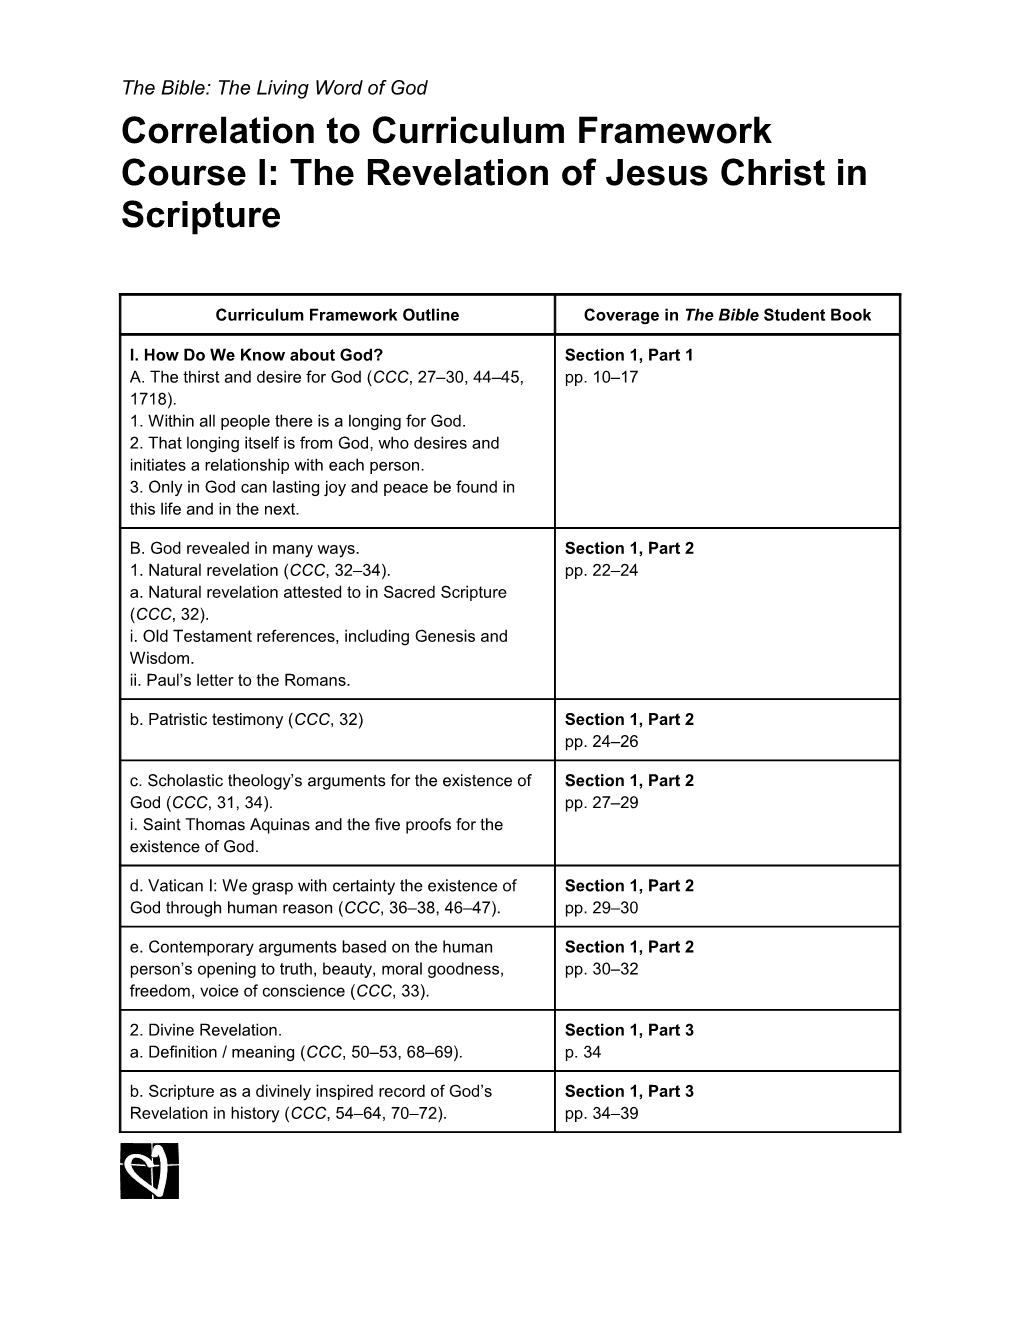 Correlation to Curriculum Framework Course I: the Revelation of Jesus Christ in Scripture